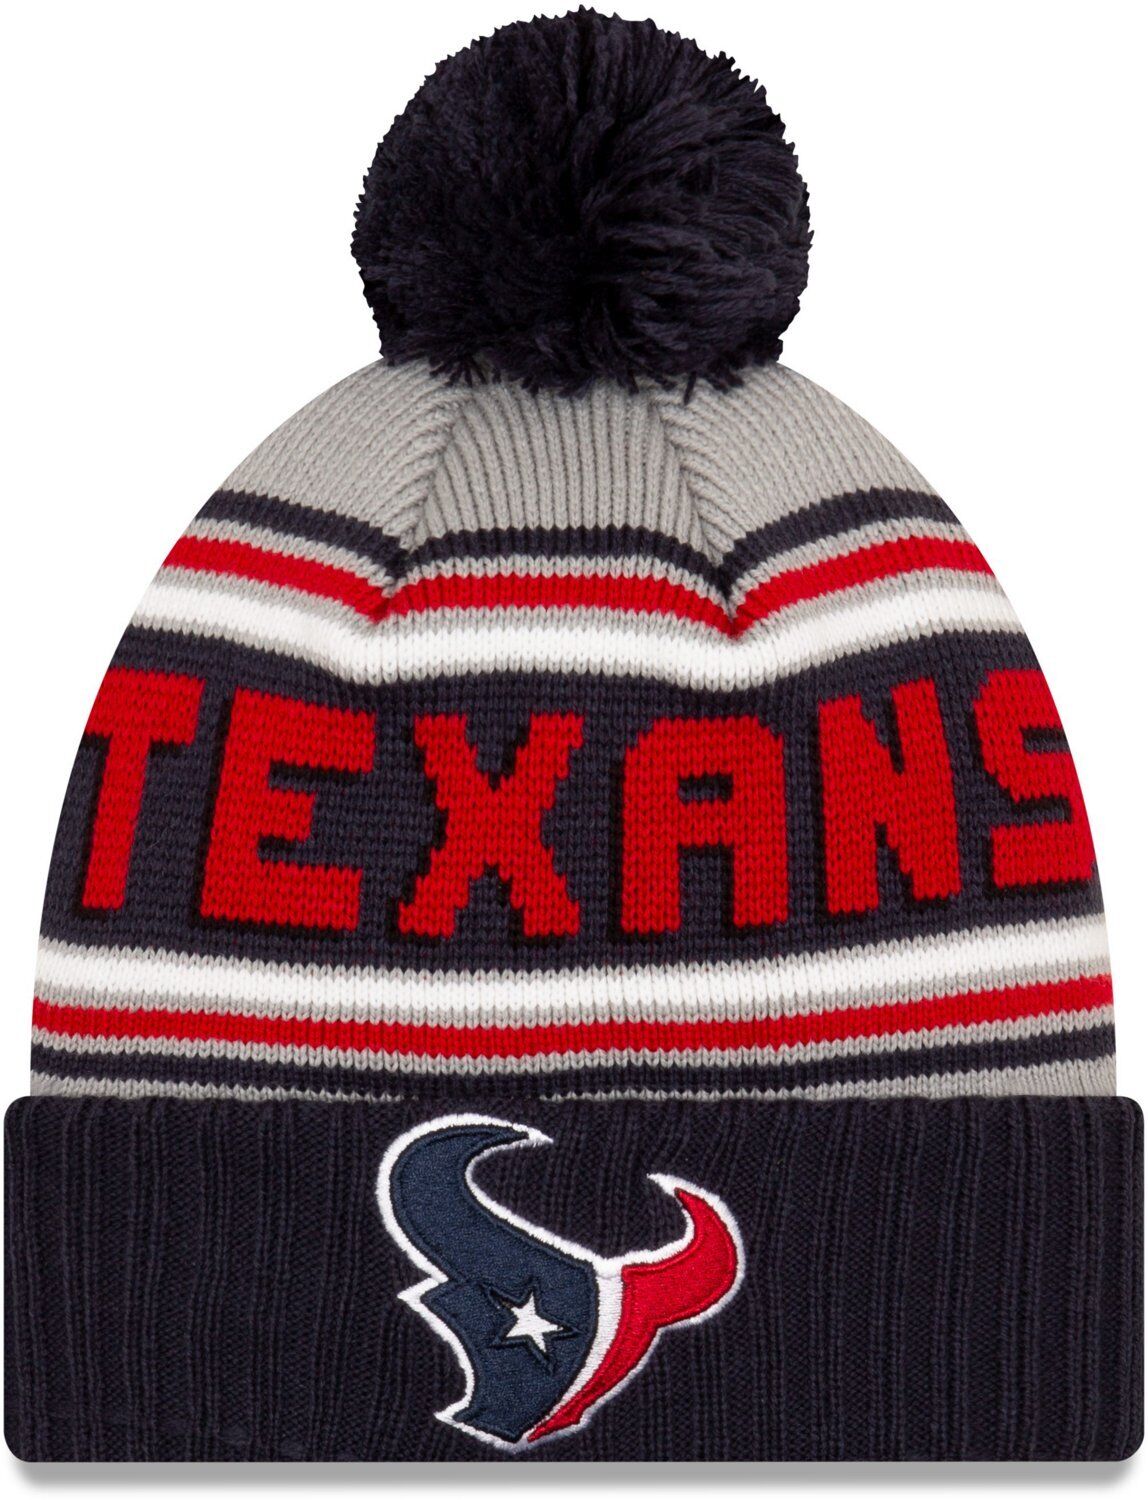 Houston Texans New Era Cheer Knit Beanie w/pom - Multicolored